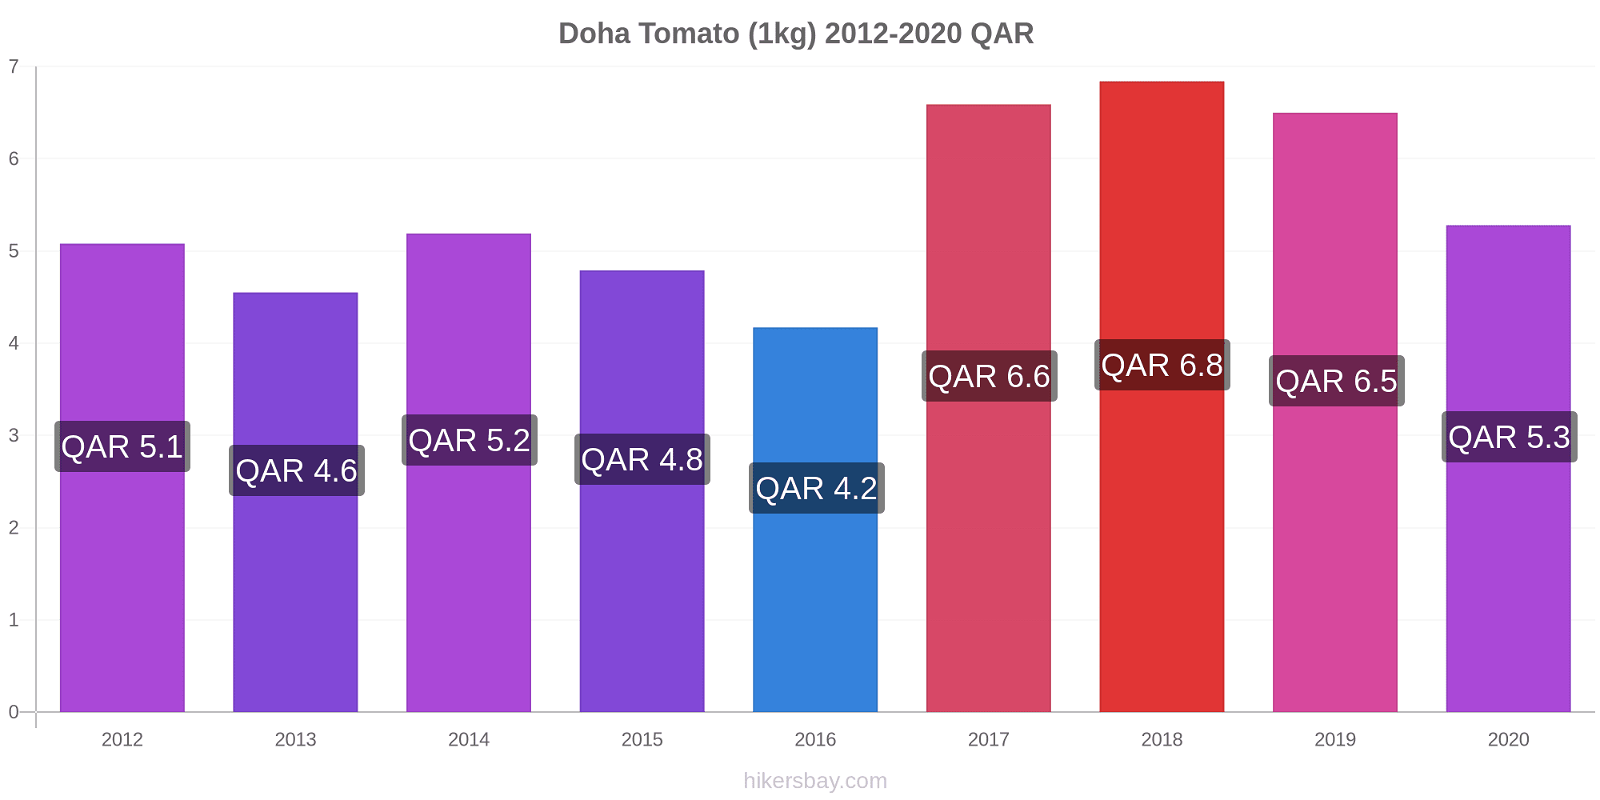 Doha price changes Tomato (1kg) hikersbay.com